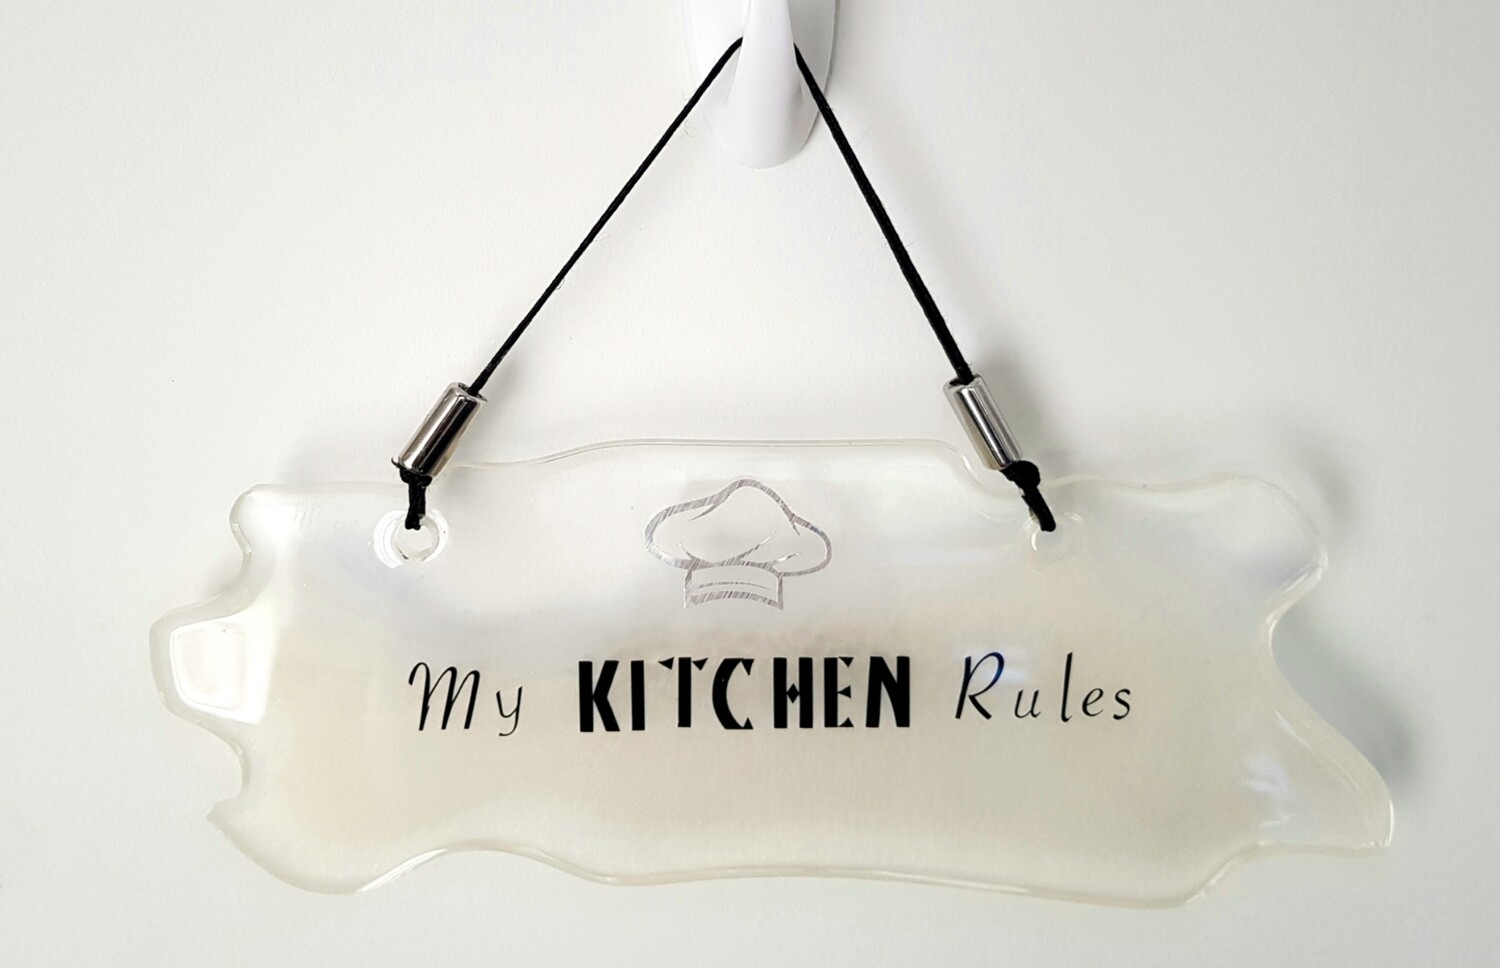 My Kitchen Rules novelty sign